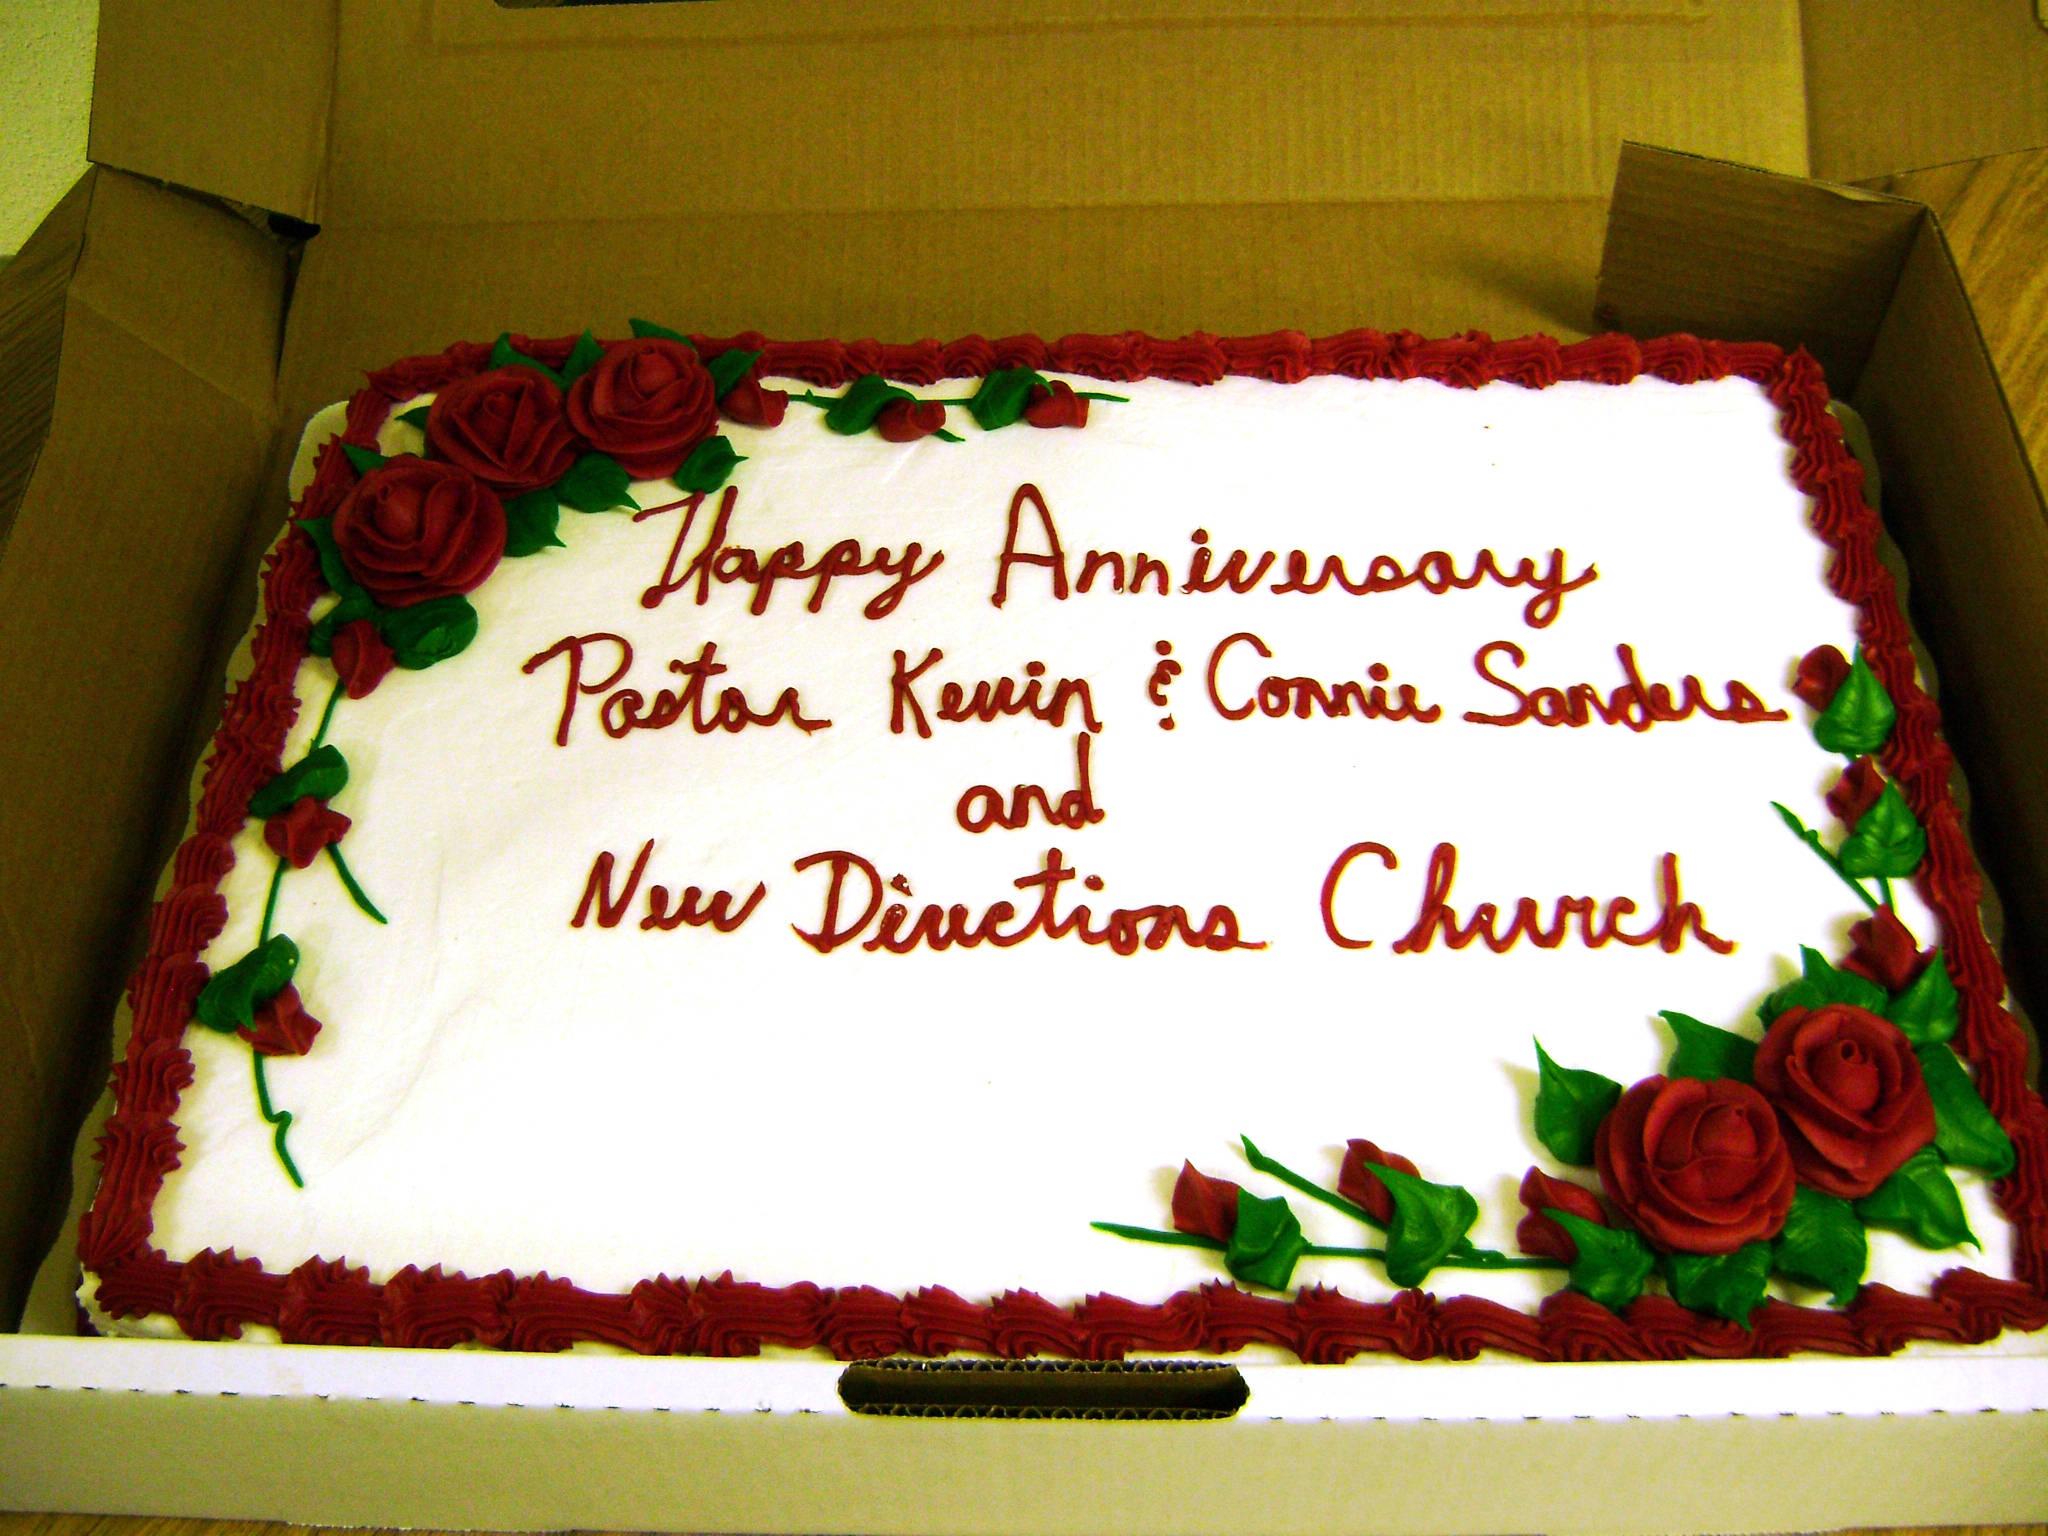 Cakeville - Church anniversary cake | Facebook